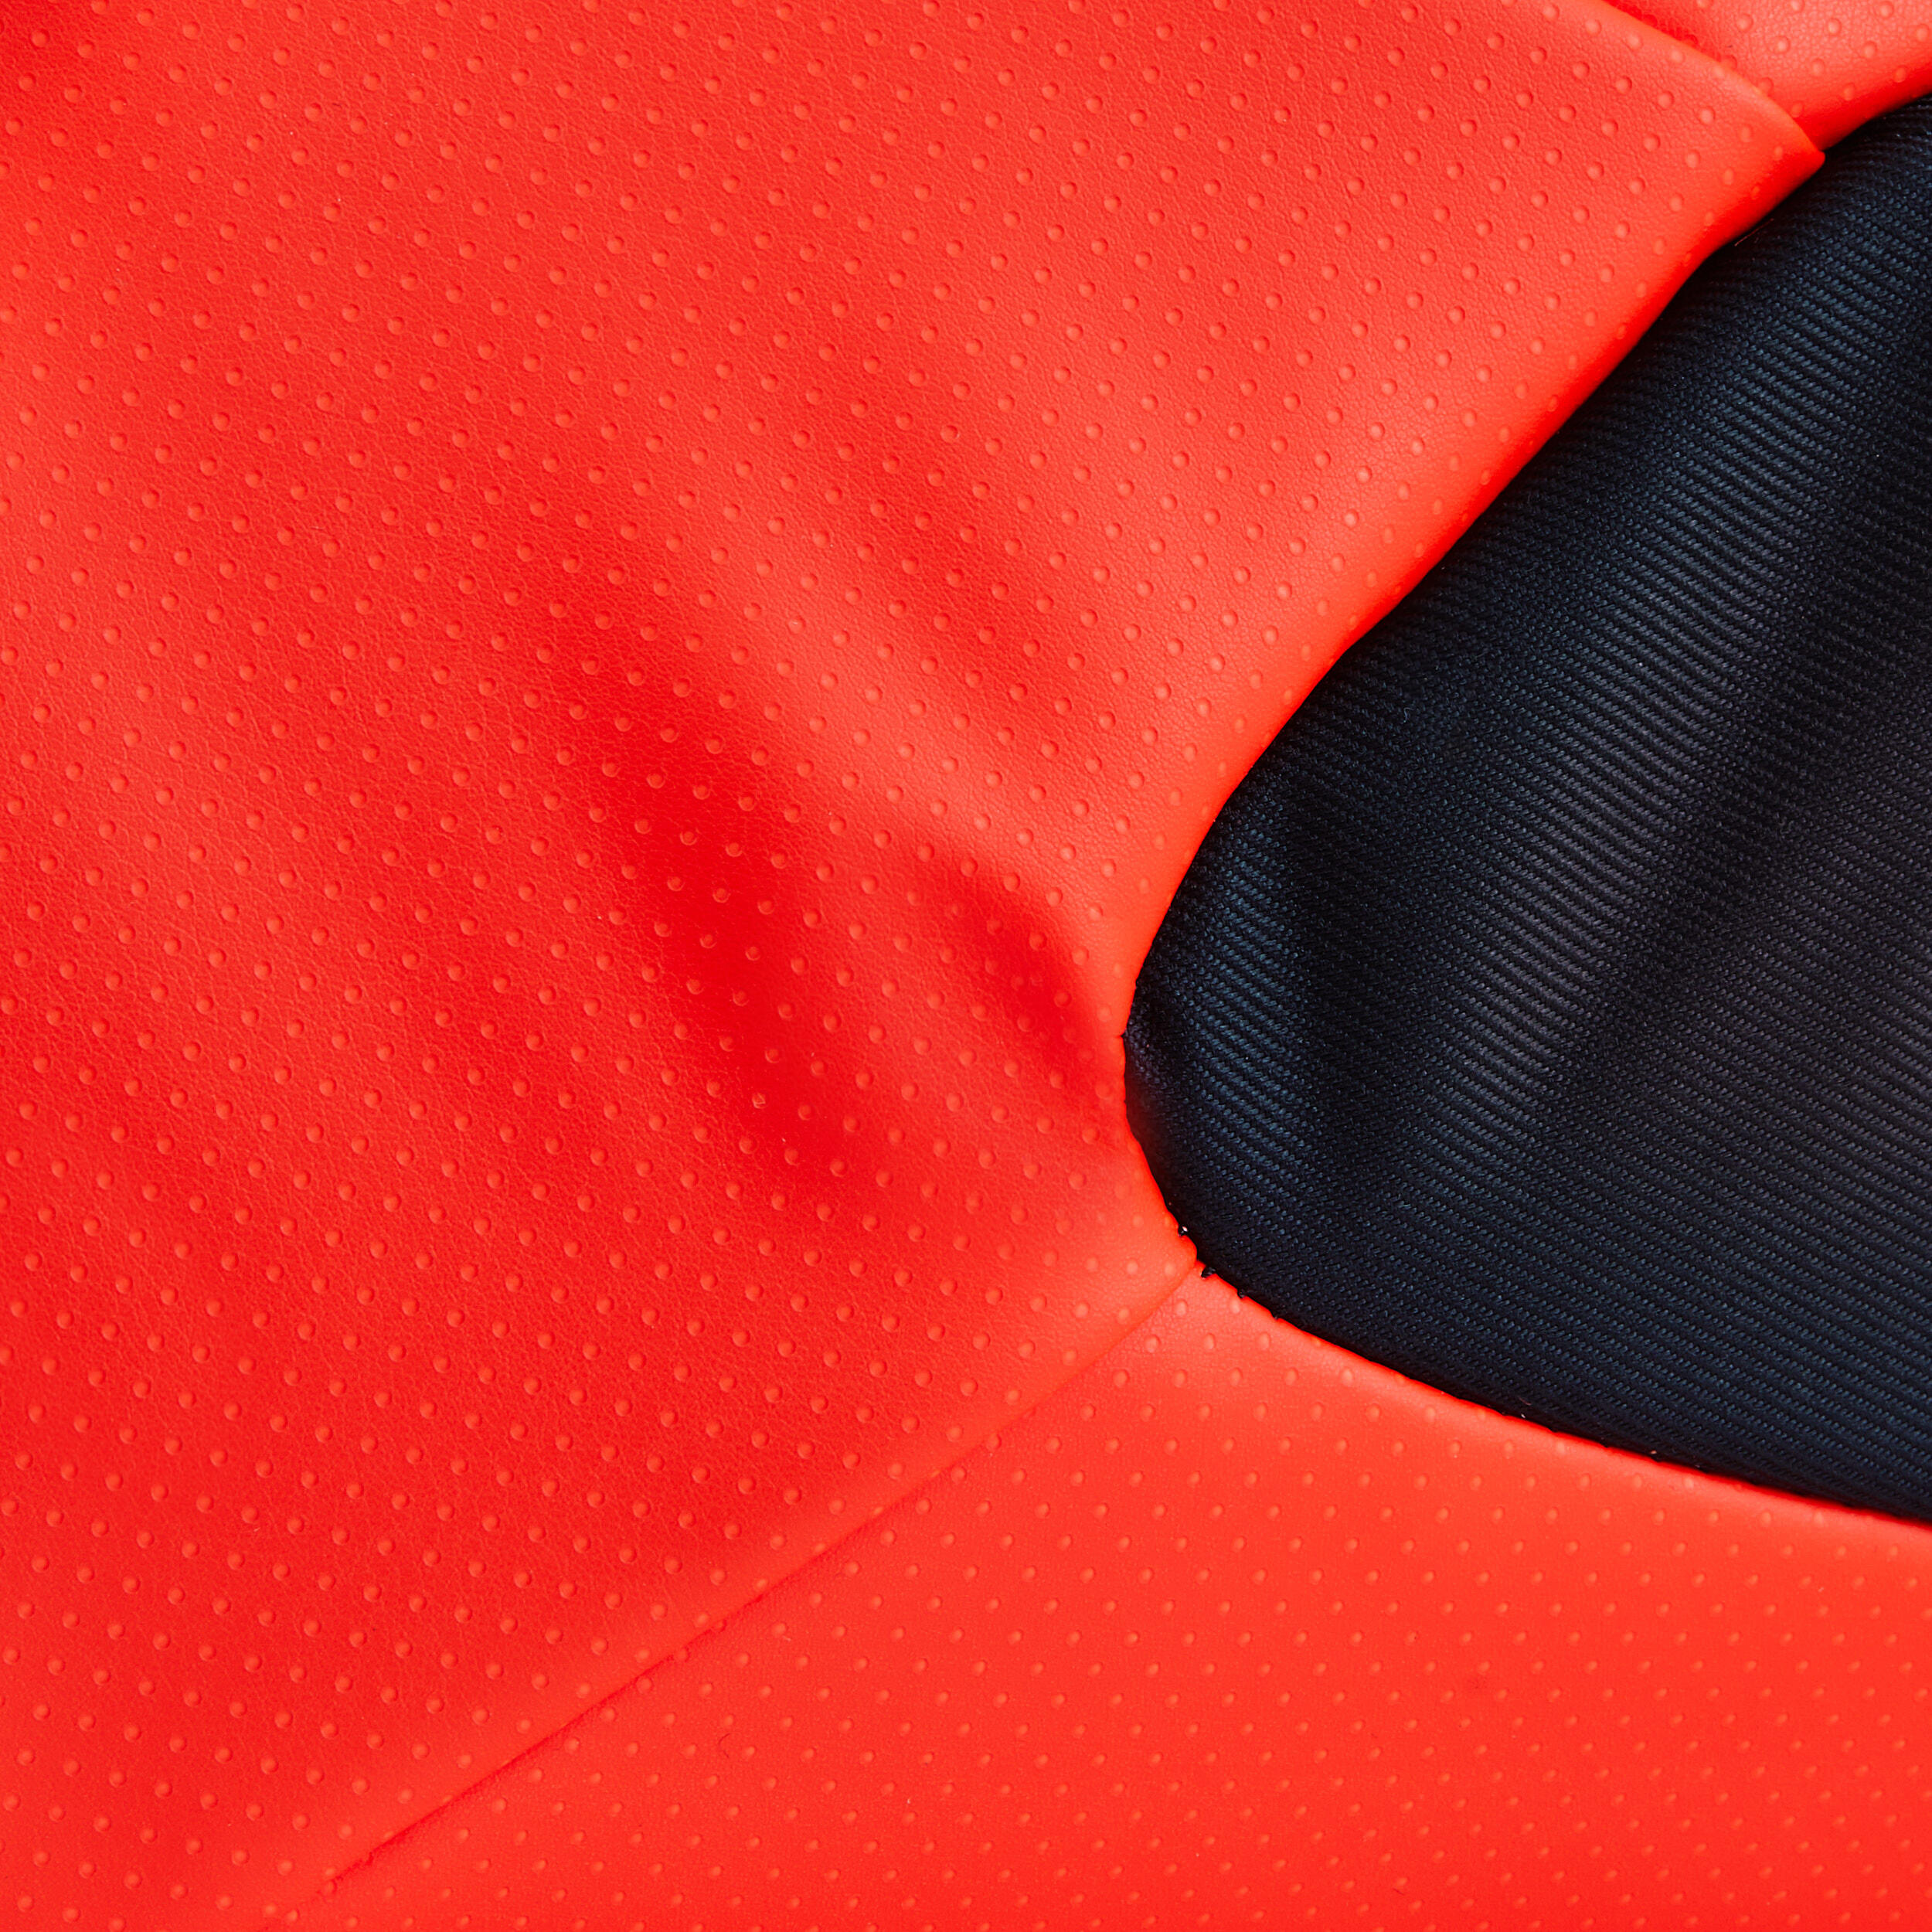 12-Racket Insulated Tennis Bag - XL Pro Power Black/Orange - ARTENGO